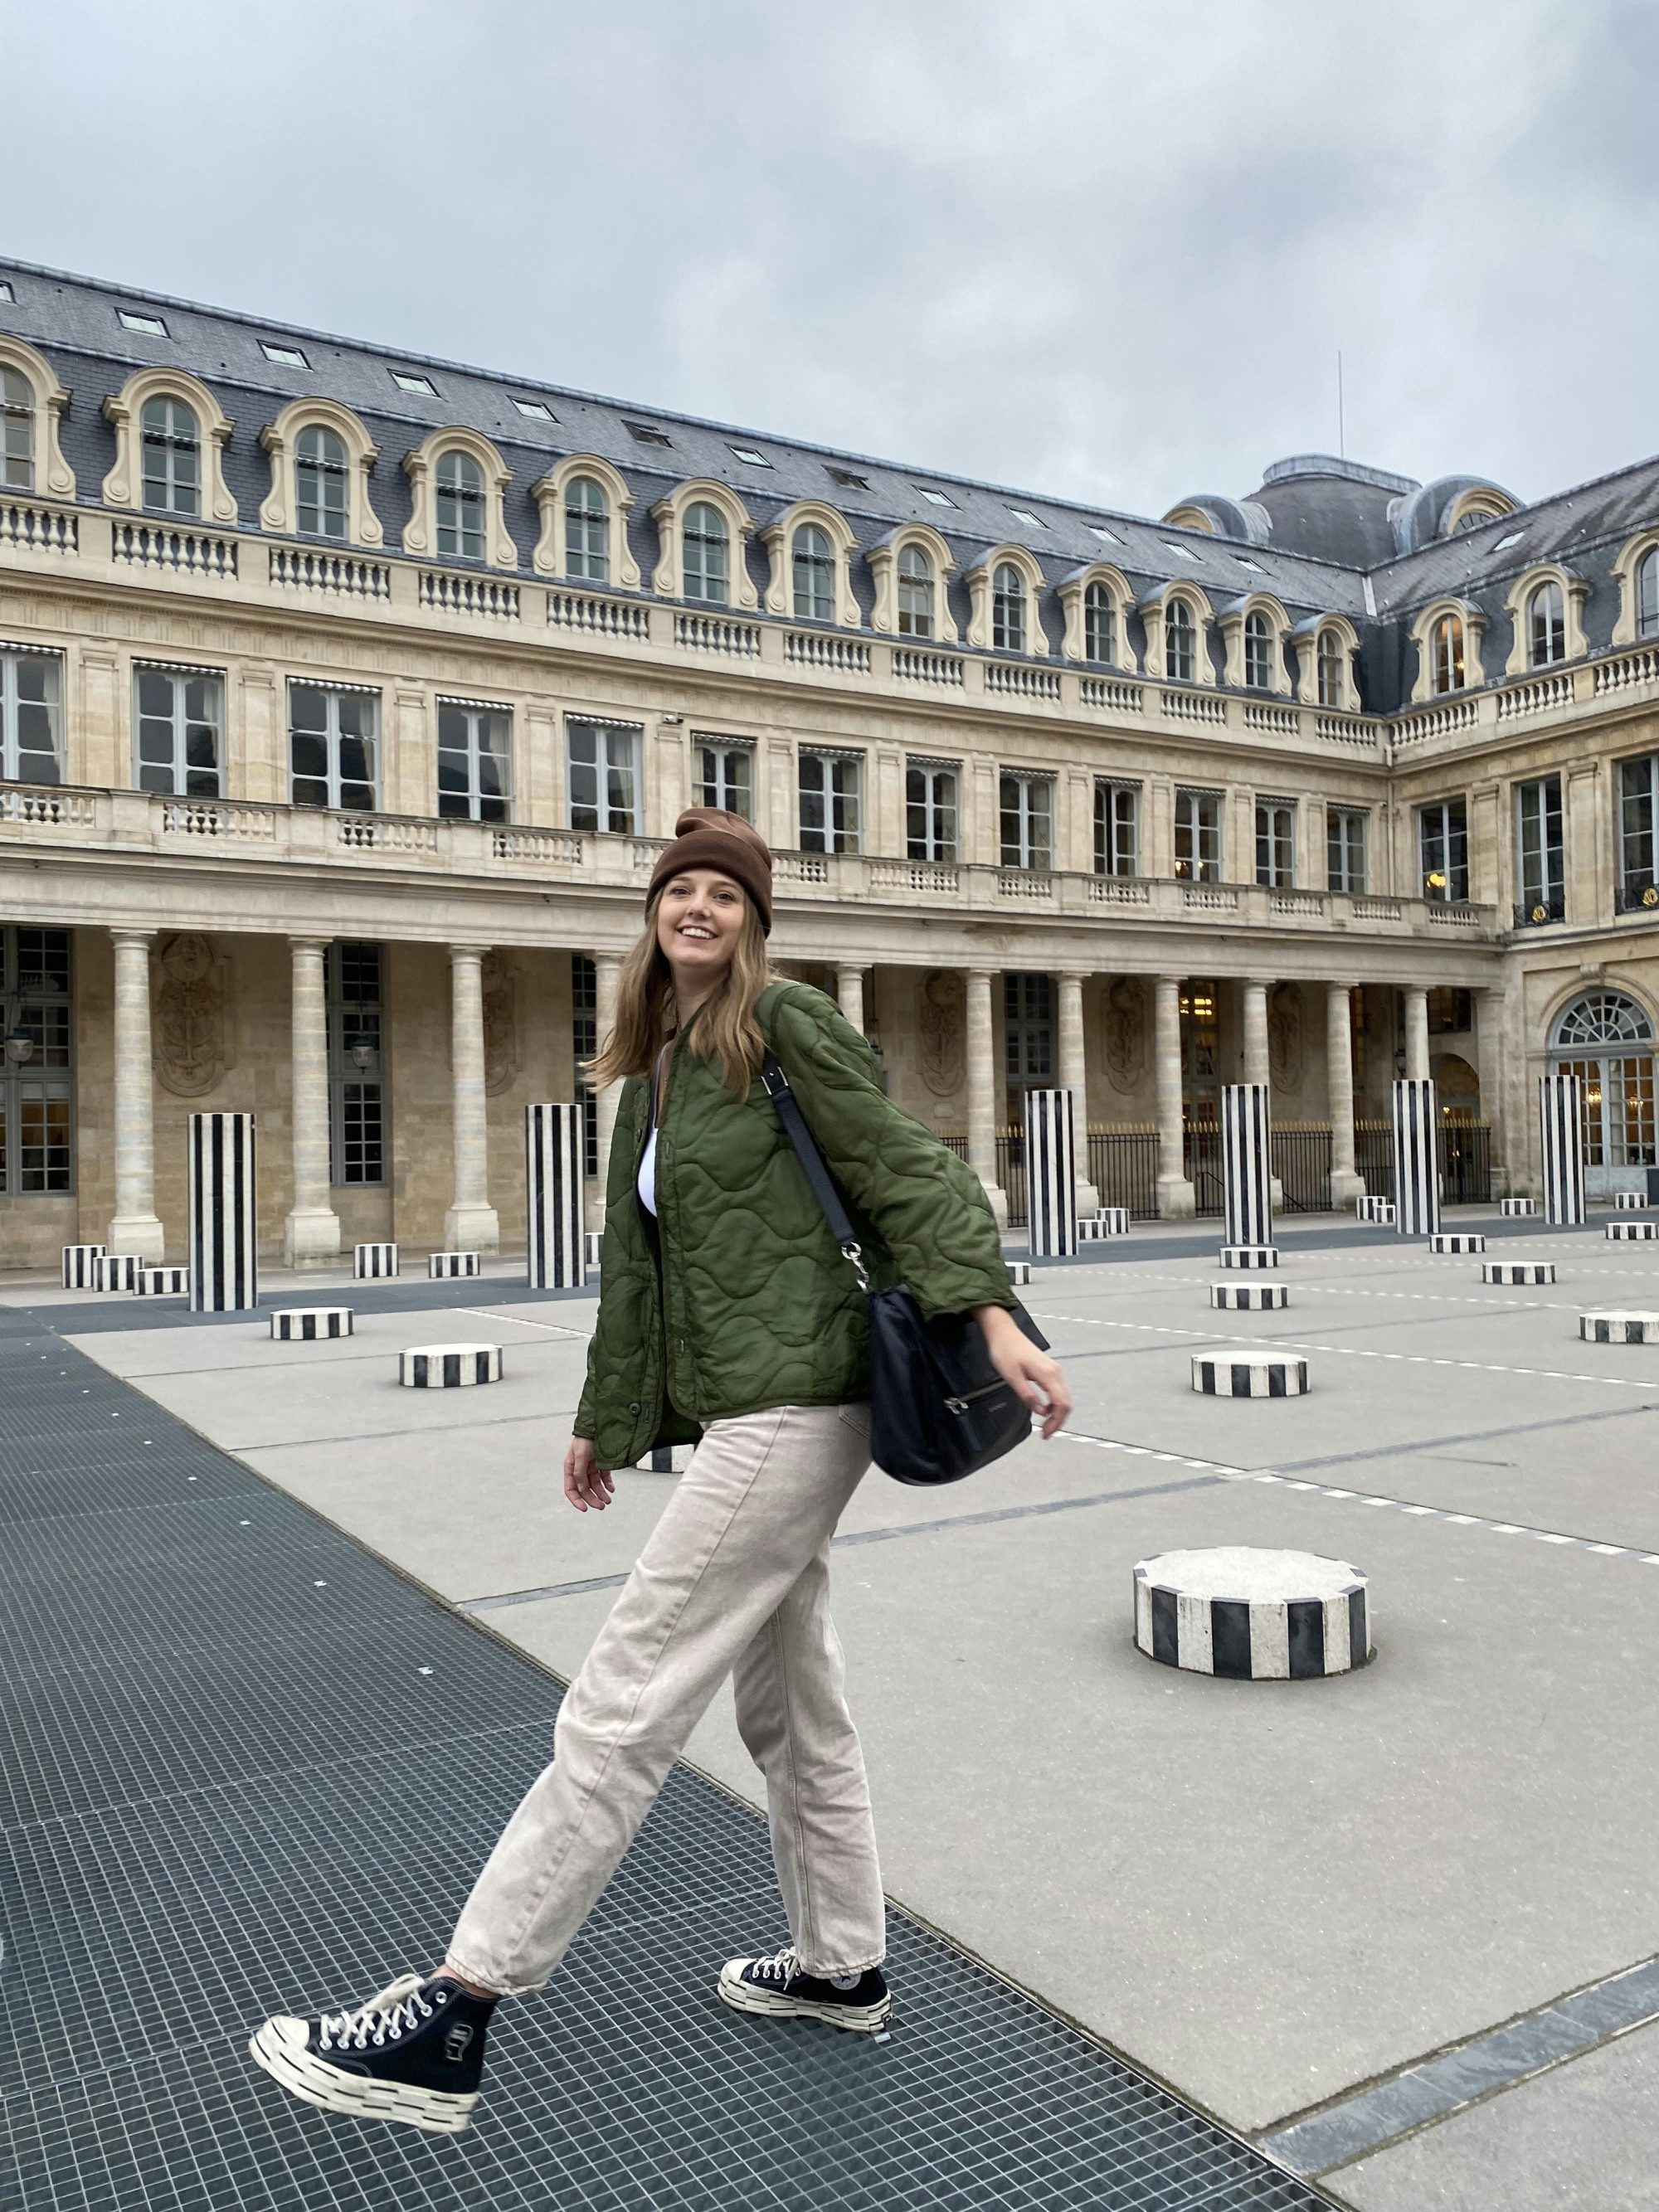 Travel Advisor Savannah Baker wears black covers and a army green coat in a Parisian courtyard. 